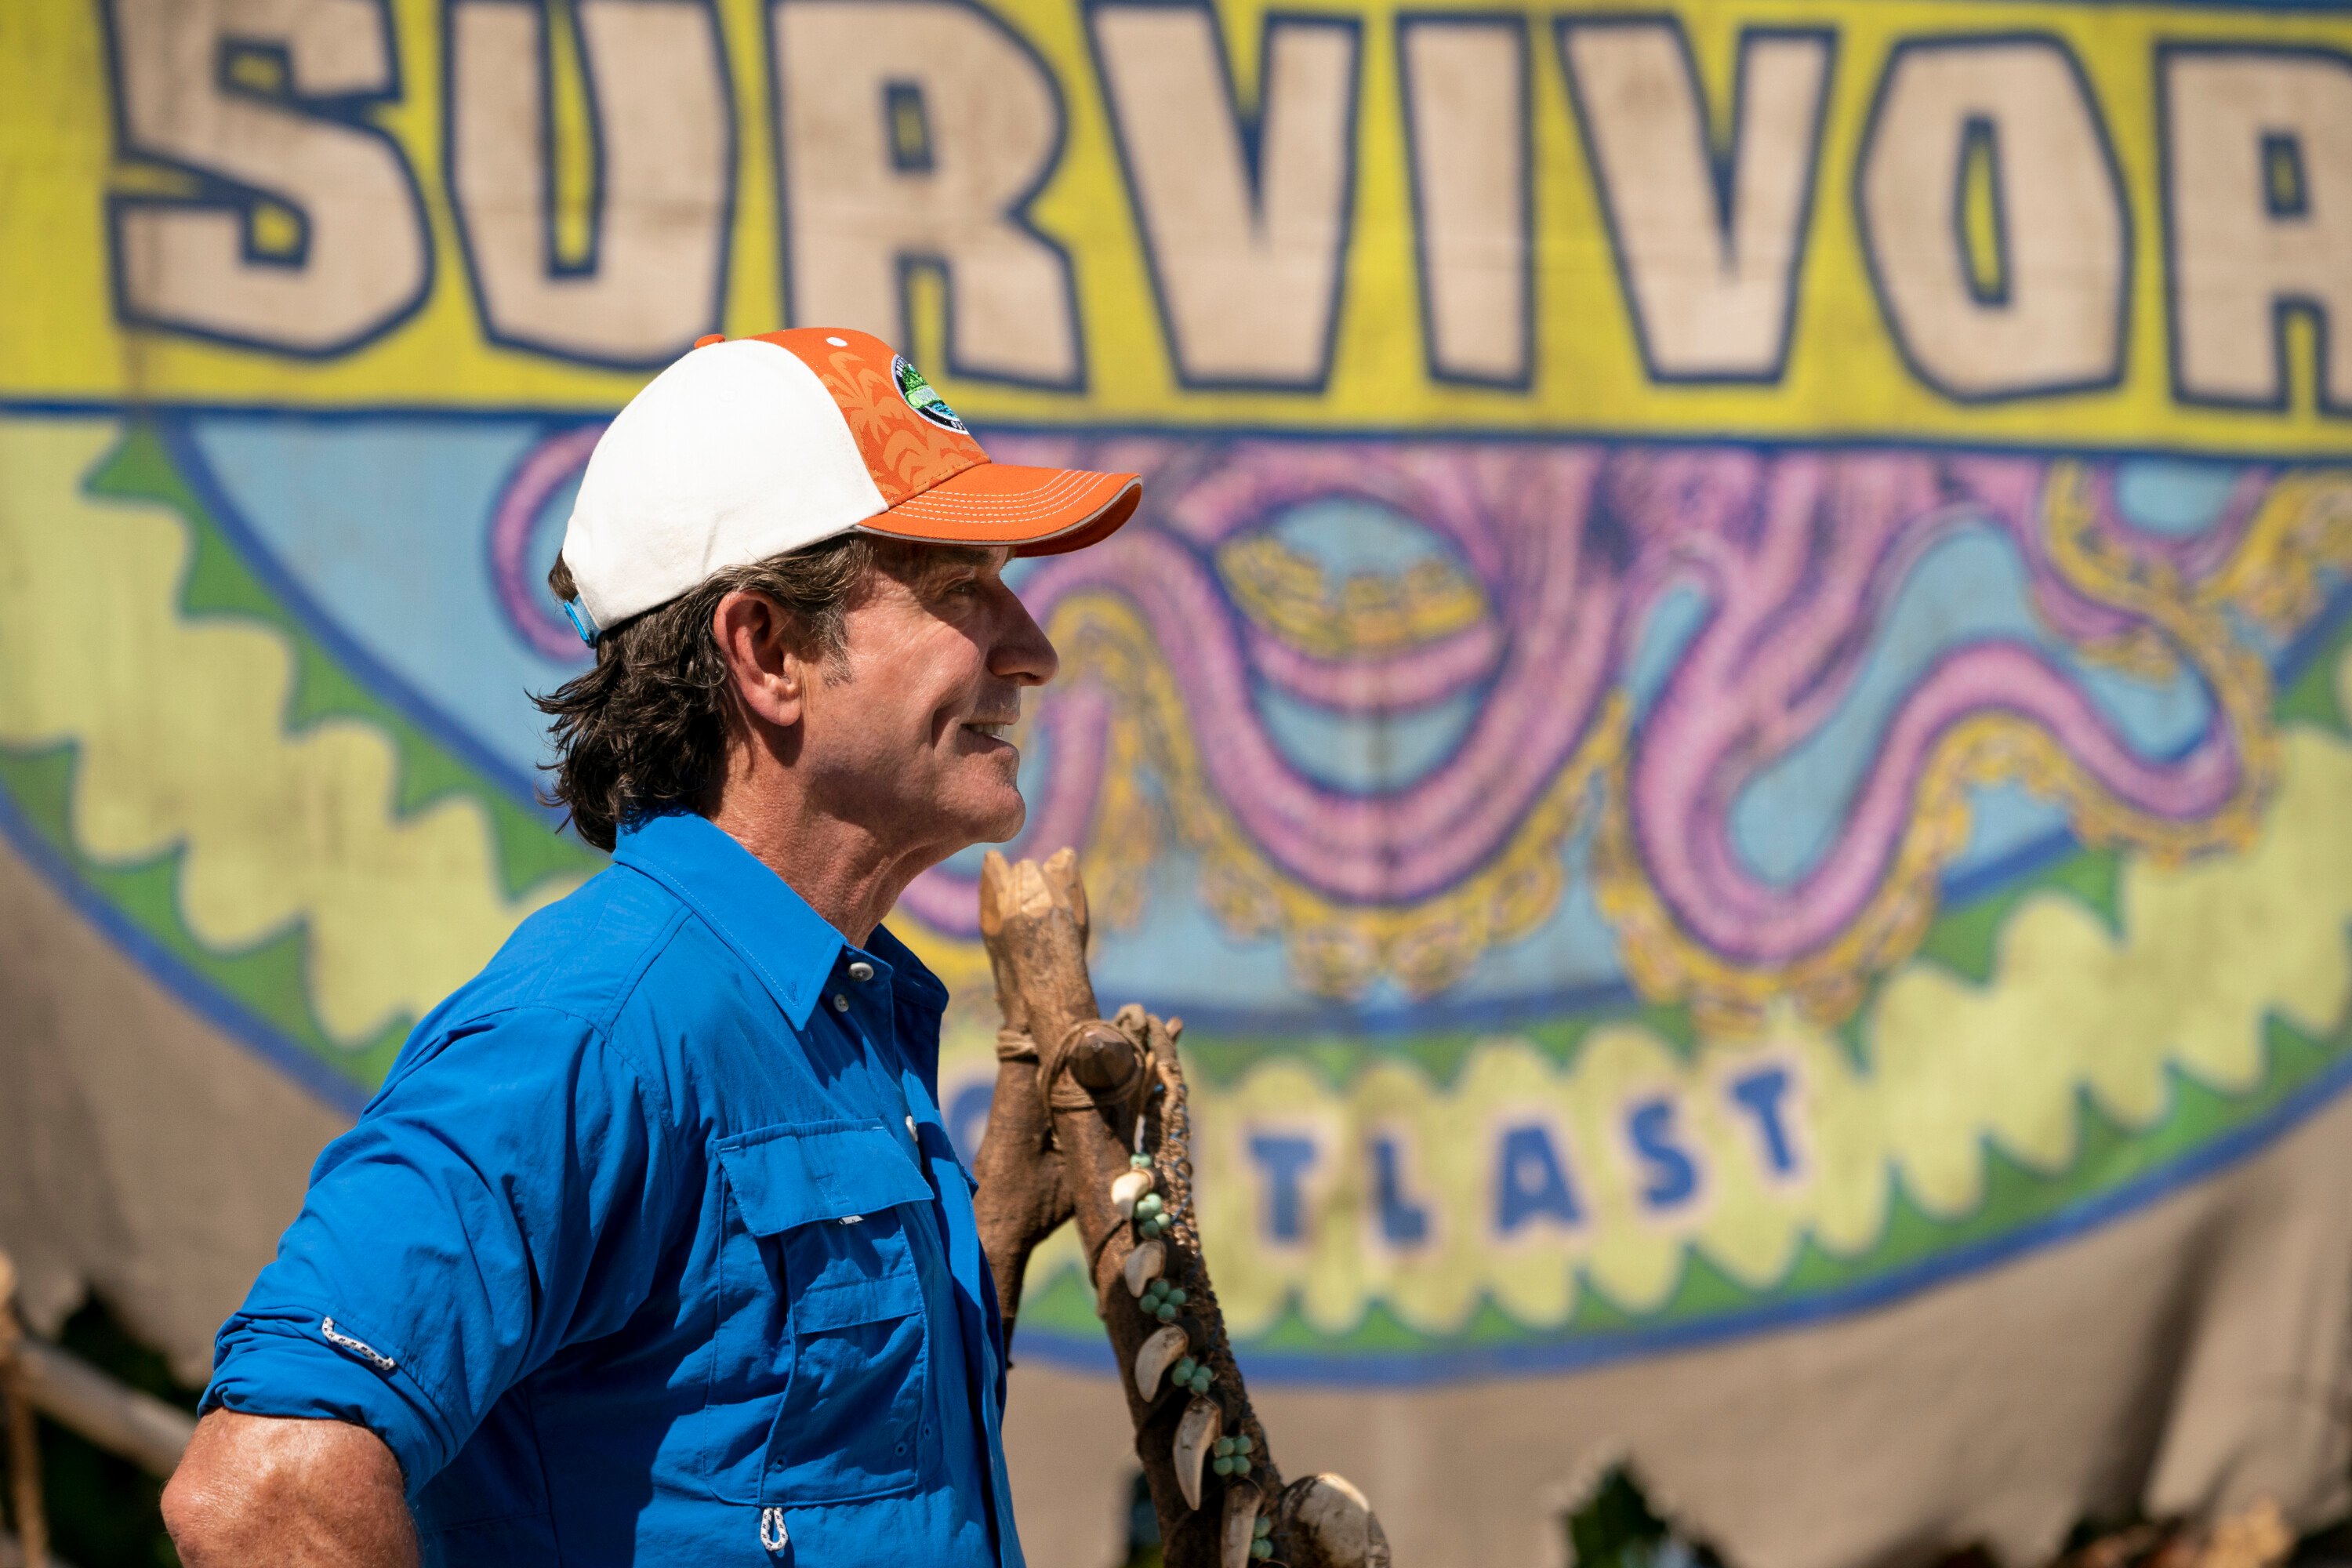 Jeff Probst, the host of 'Survivor' Season 43 on CBS, wears a blue button-up shirt and white and orange 'Survivor' baseball cap.